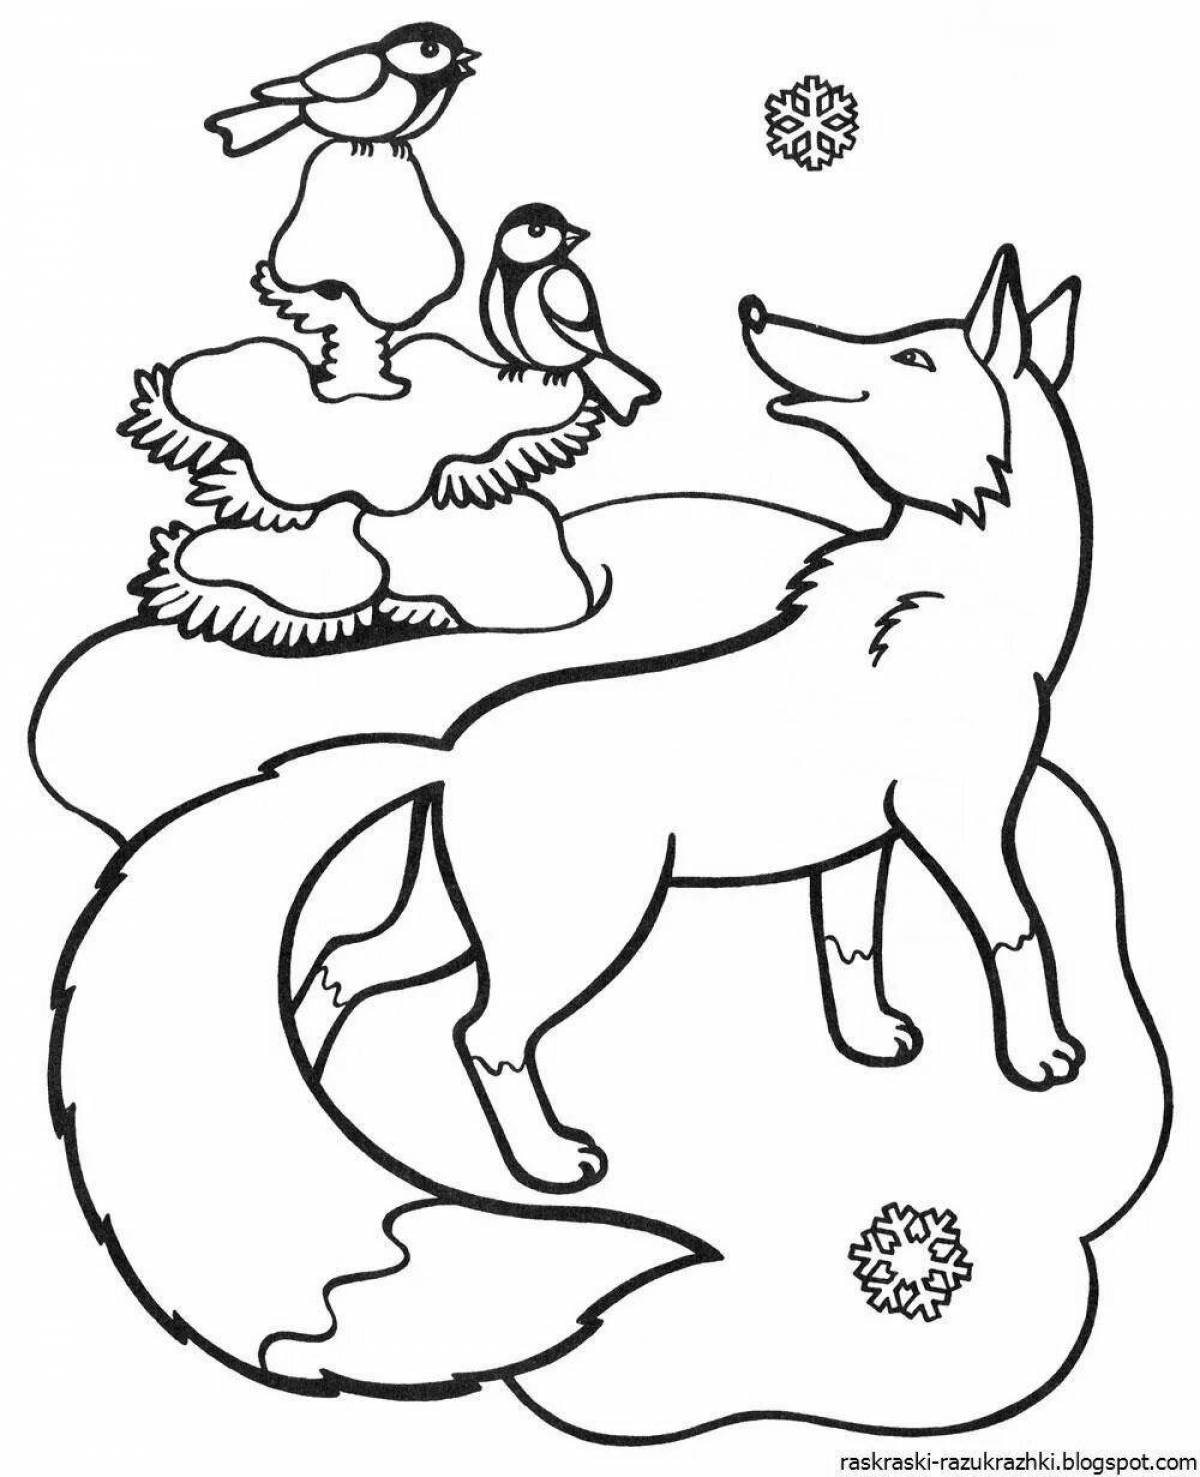 Coloring book brave fox in winter